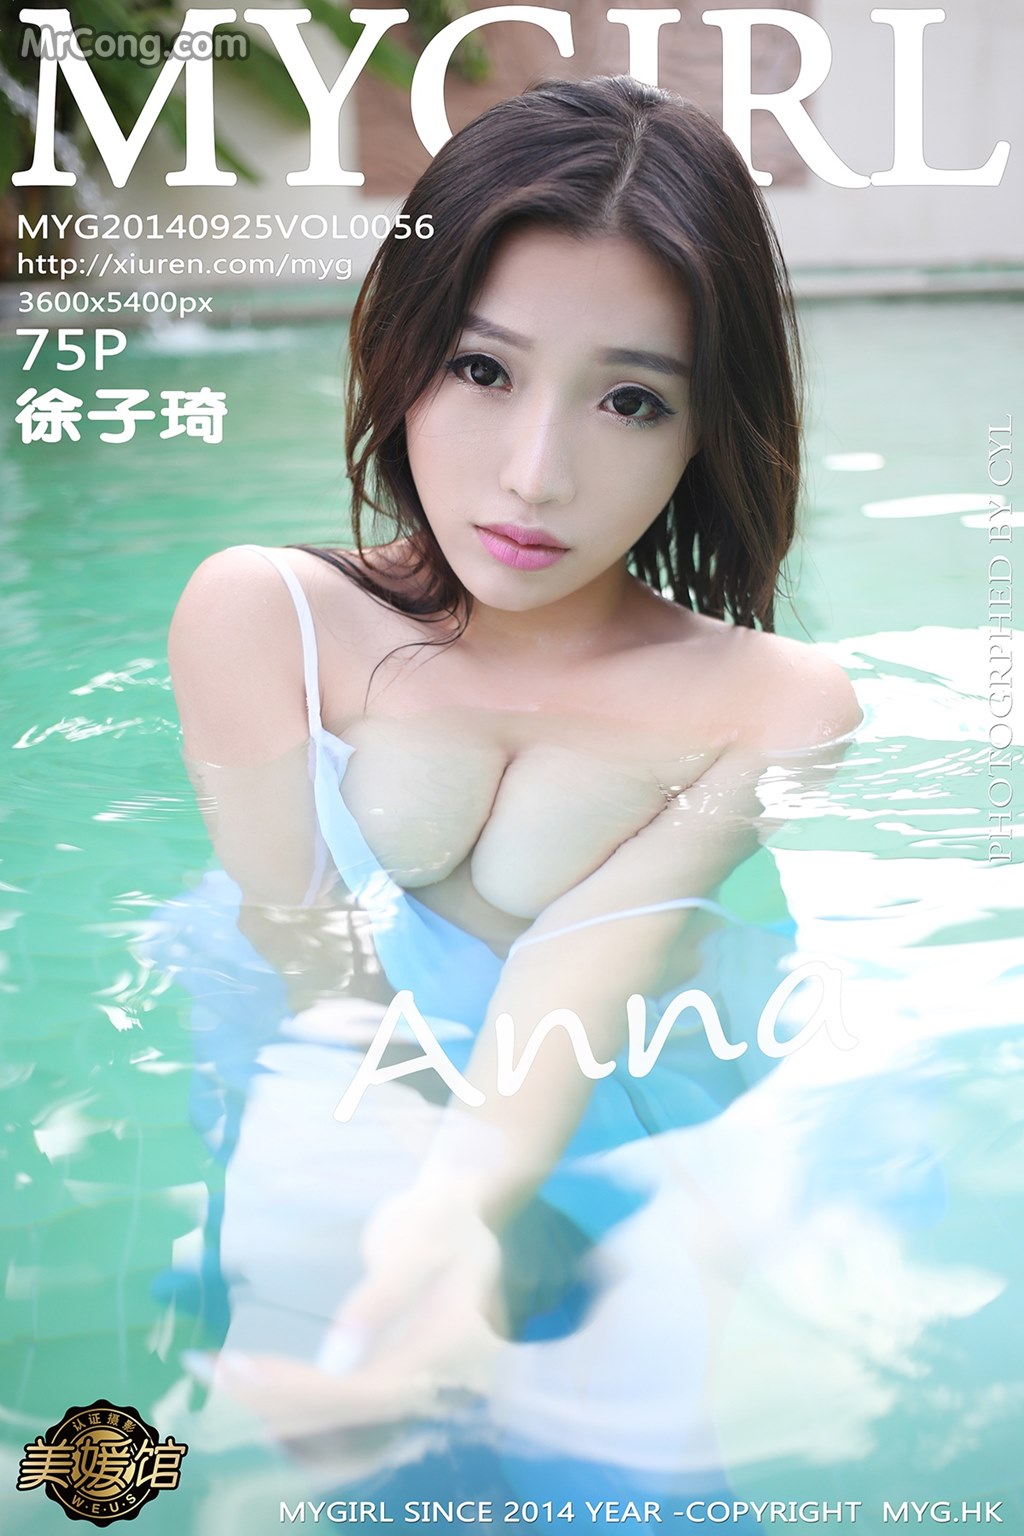 MyGirl Vol.056: Anna (徐子琦) Model (76 pictures) photo 1-0